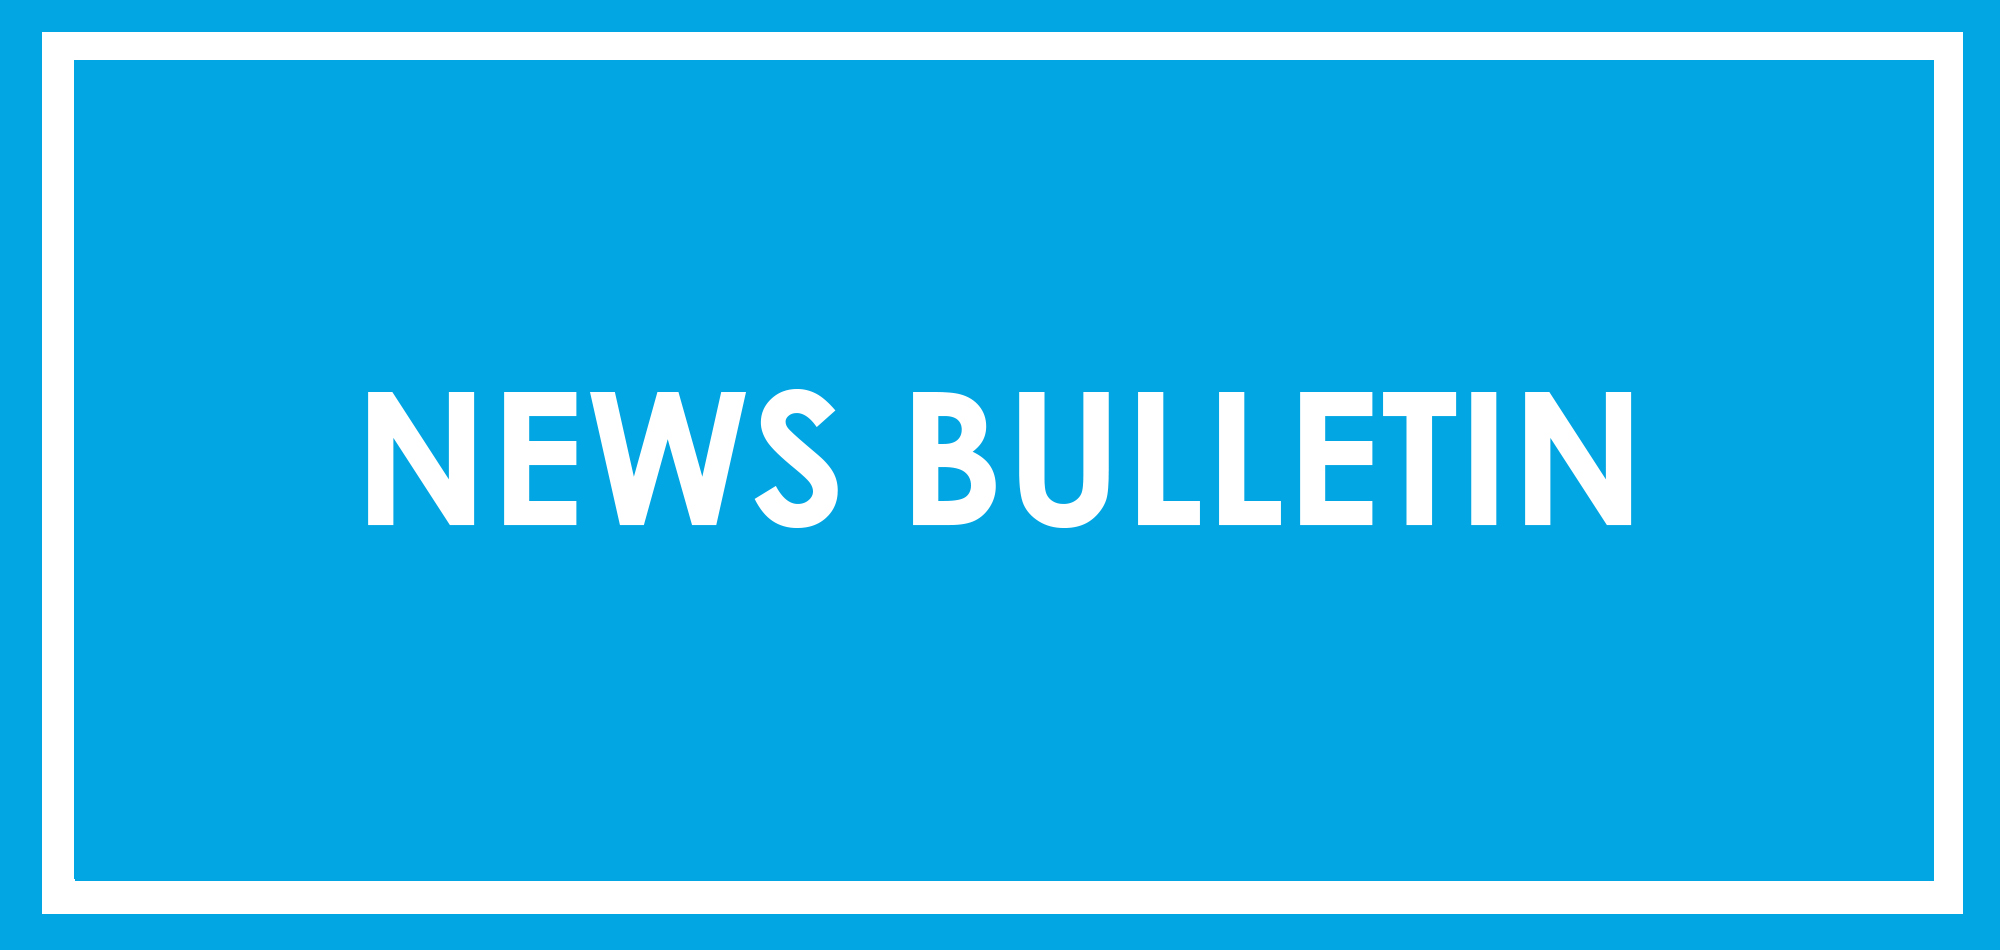 News Bulletin - 28.07.22